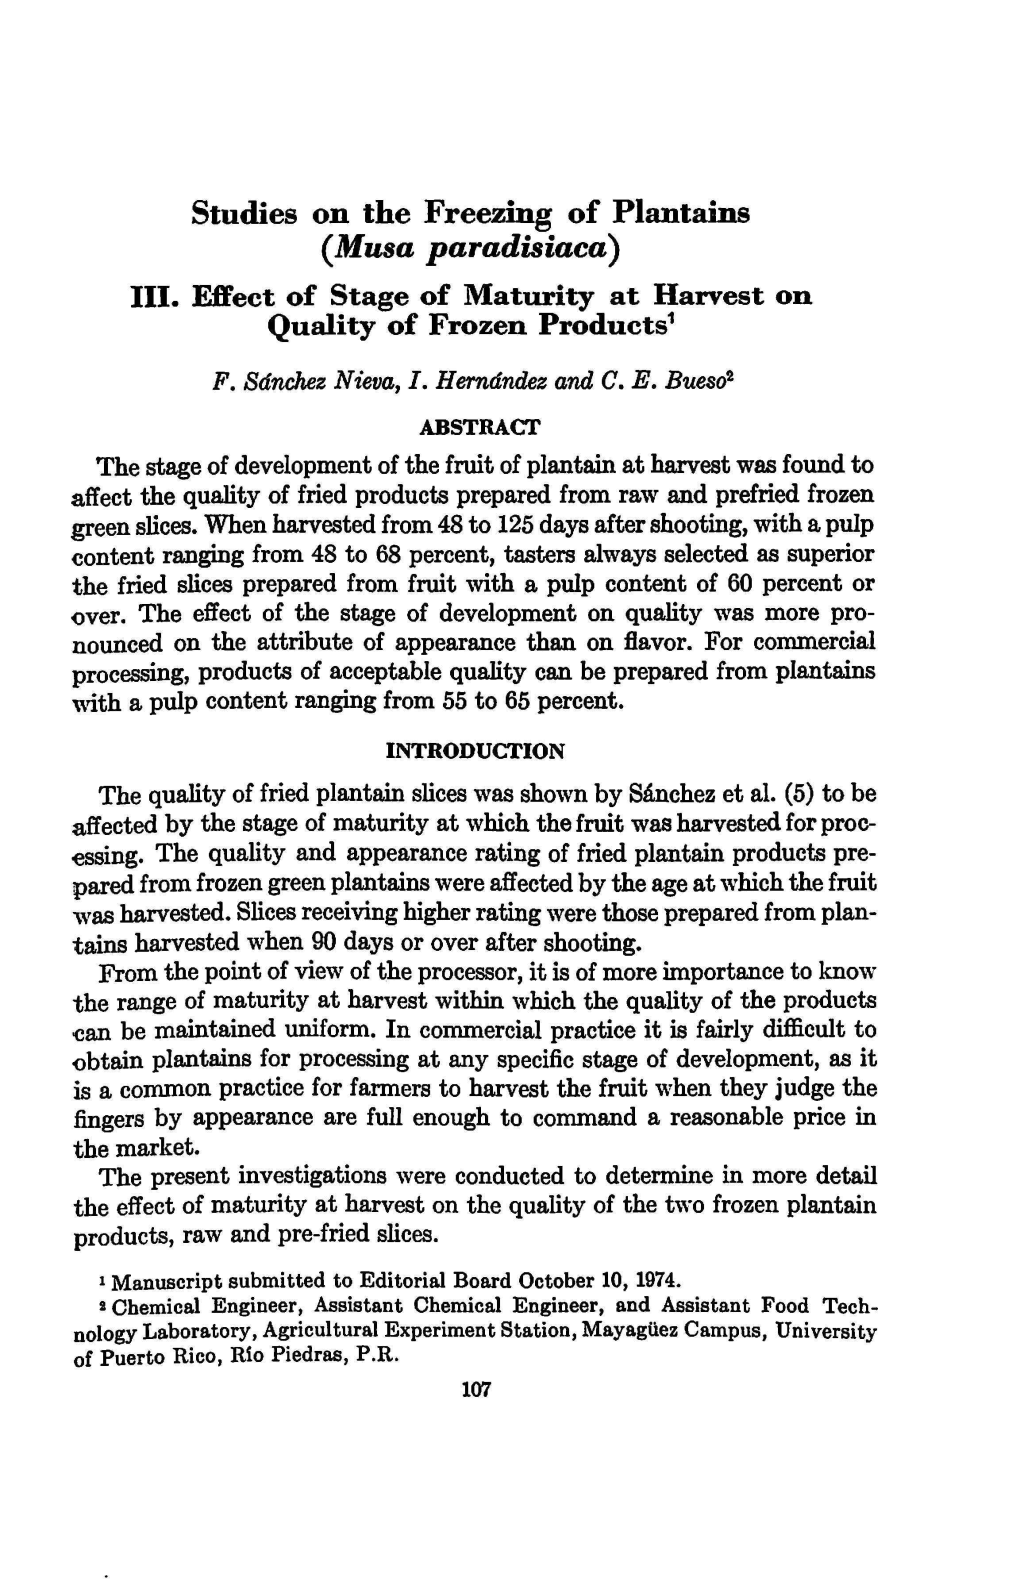 Studies on the Freezing of Plantains (Musa Paradisiaca) III